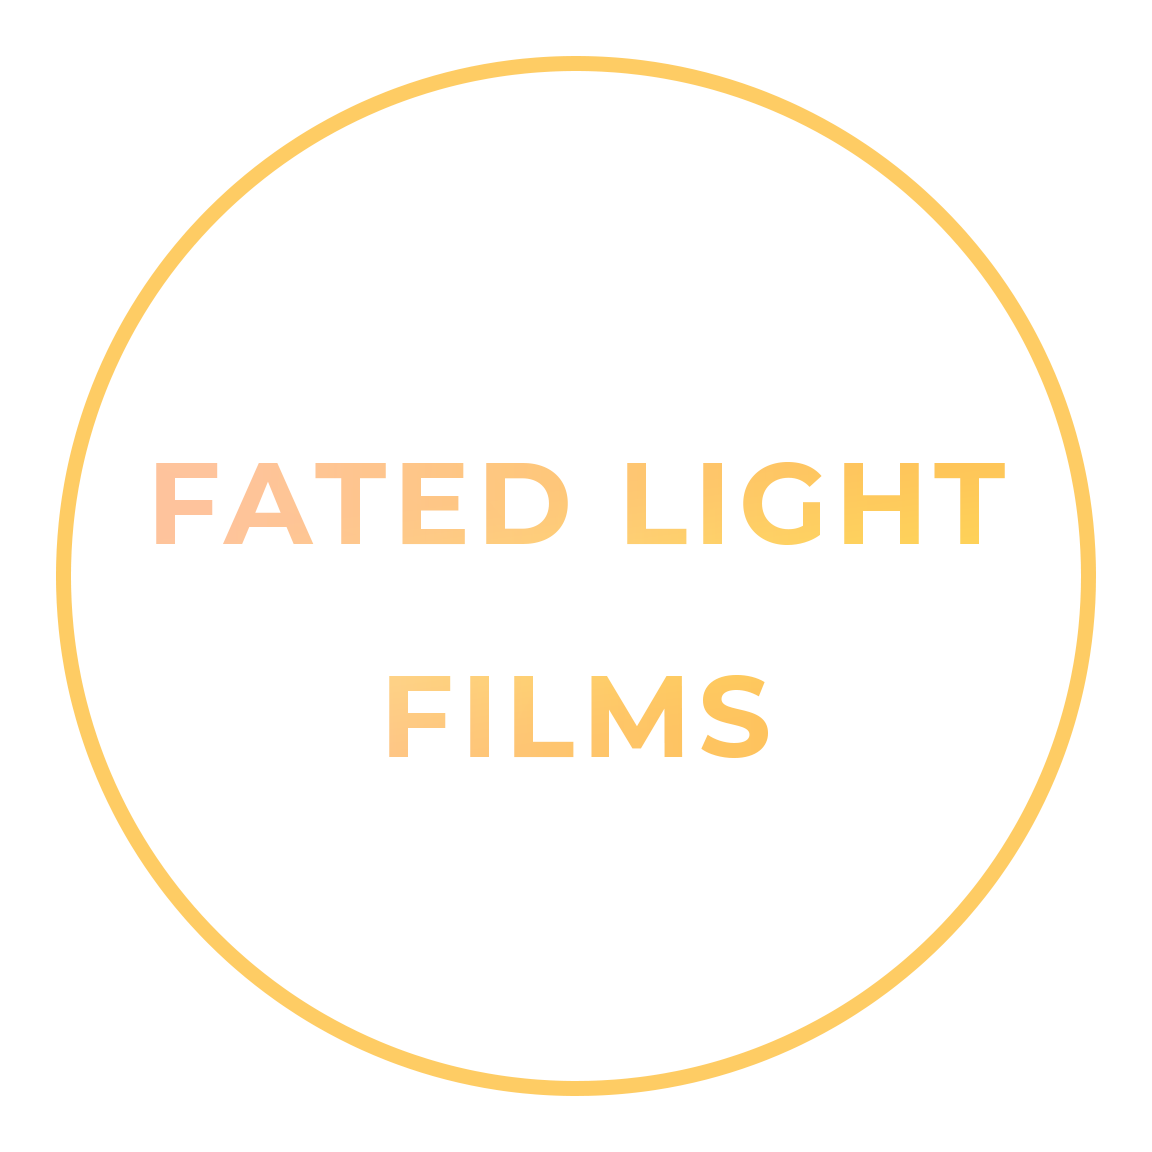 Fated Light Films